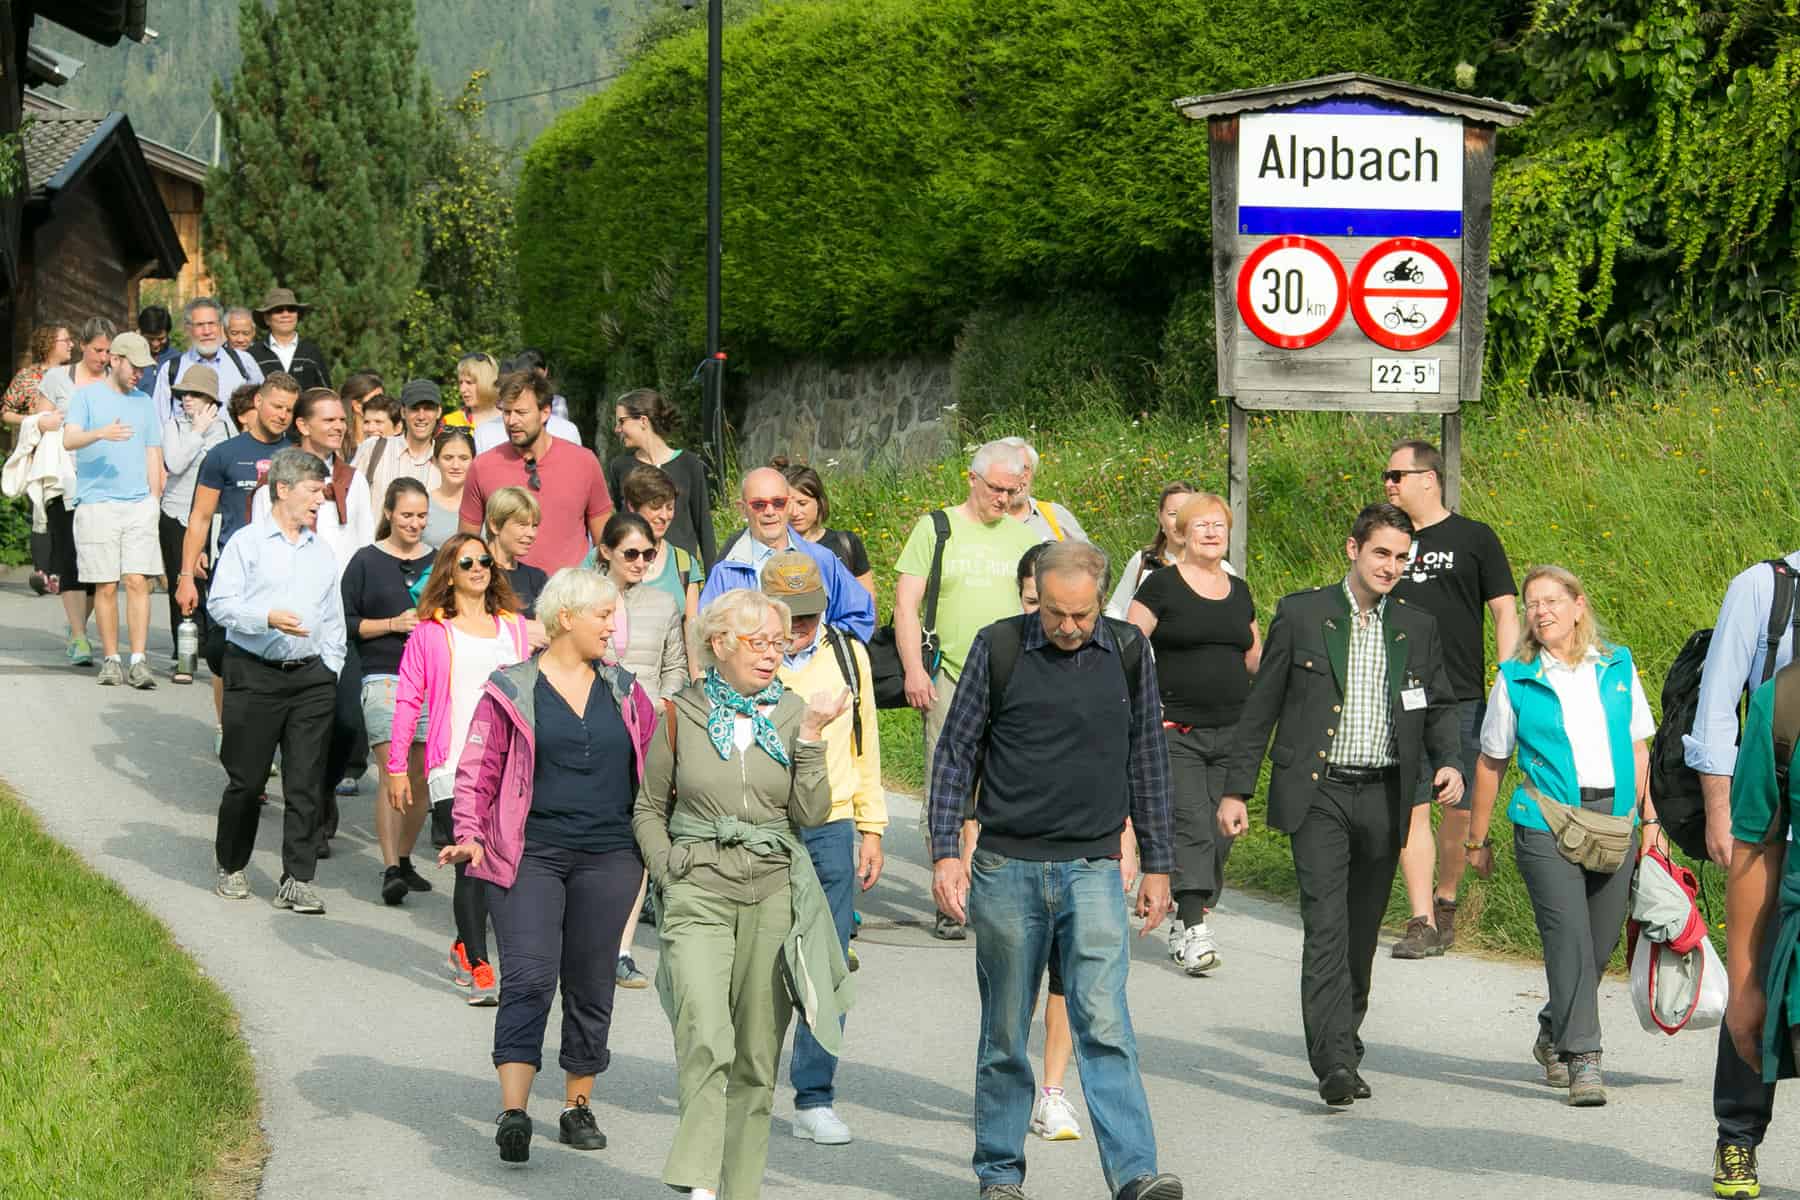 Members of the Alpbach Laxenburg Group and Impact Hub hike in Alpbach, Austria in August 2016. © Matthias Silveri | IIASA